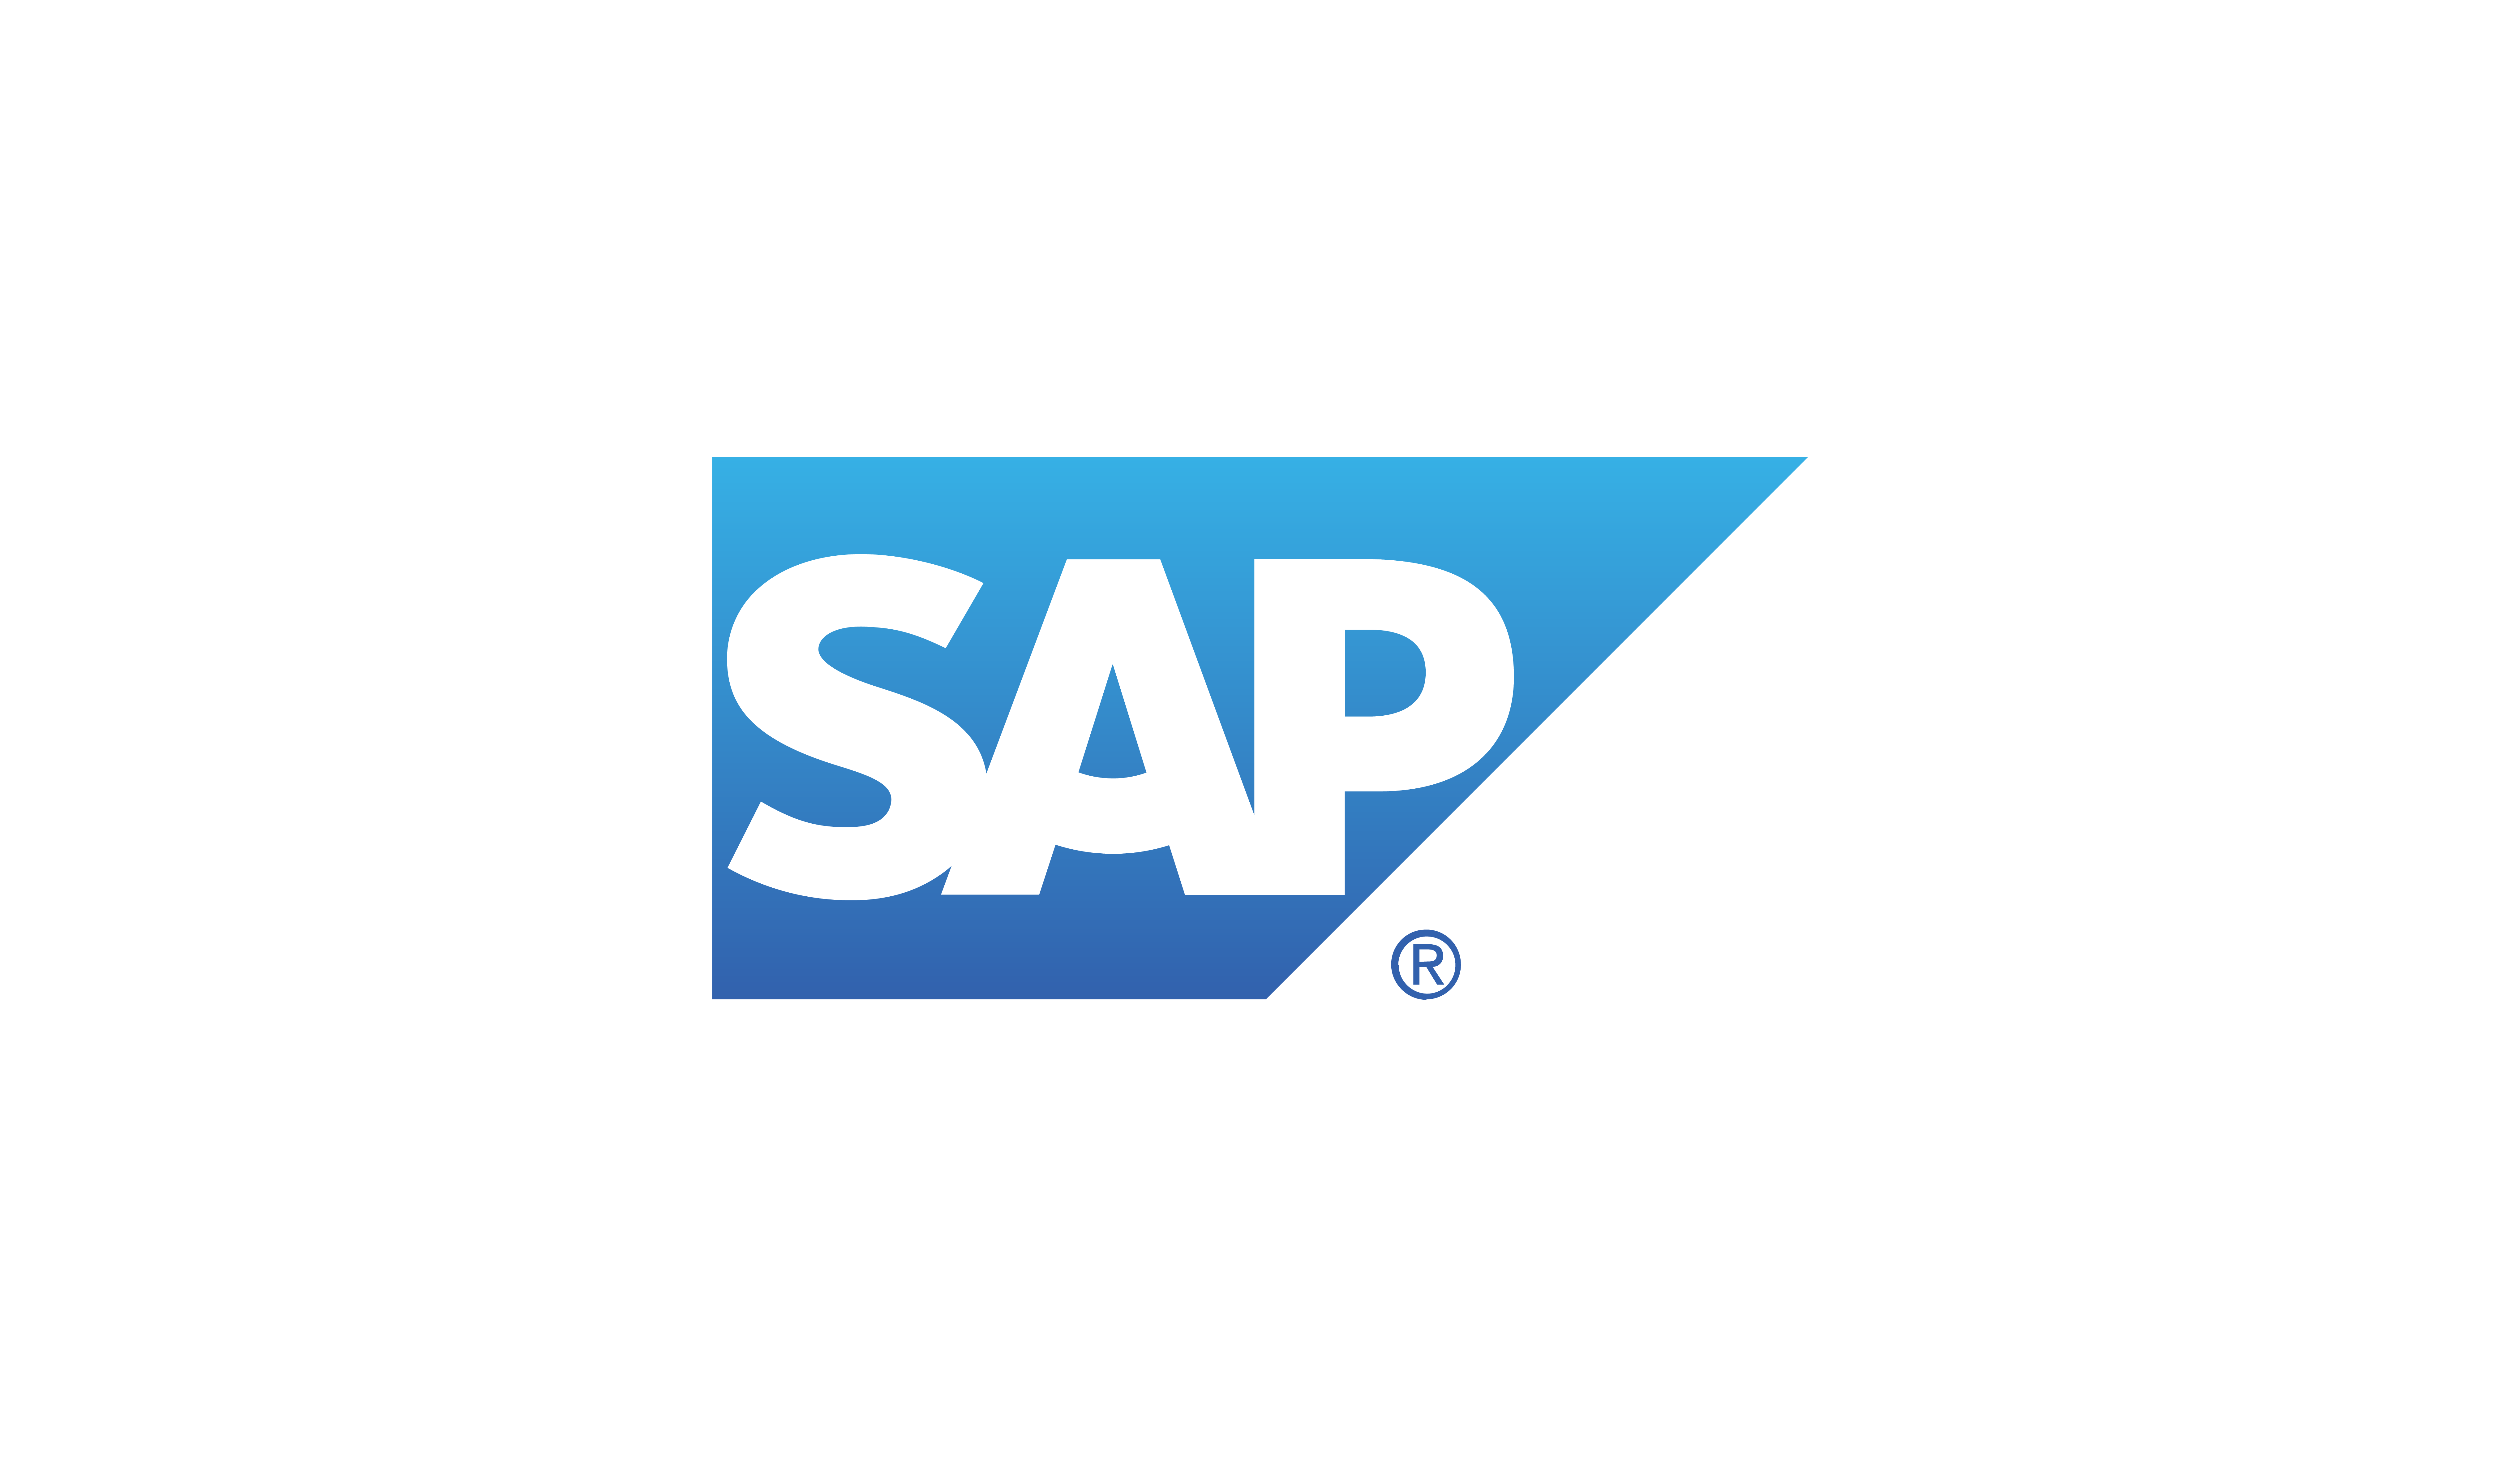 SAP SuccessFactors logo, Vector Logo of SAP SuccessFactors brand free  download (eps, ai, png, cdr) formats